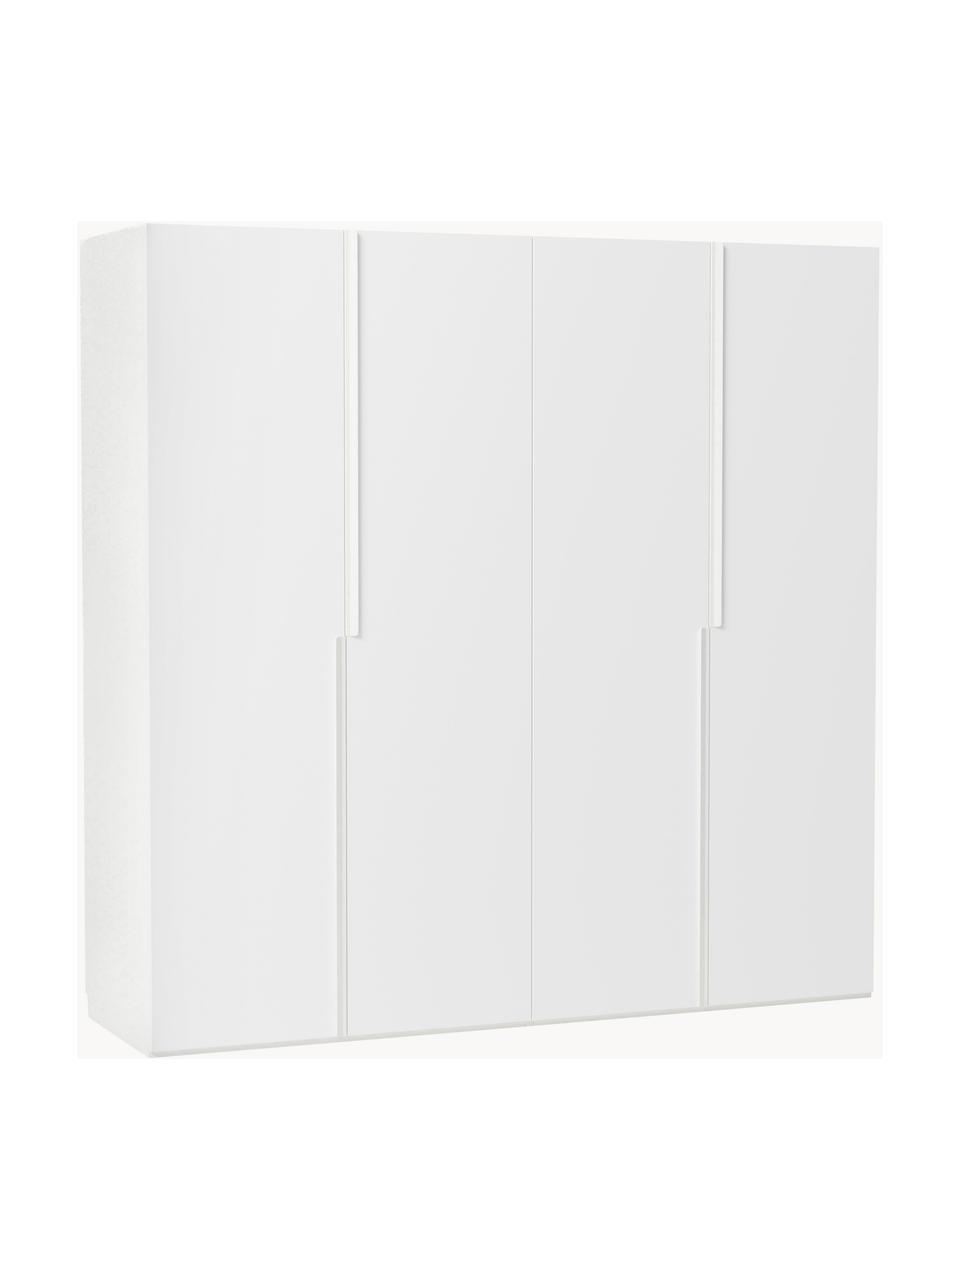 Modulární skříň s otočnými dveřmi Leon, šířka 200 cm, více variant, Bílá, Interiér Premium, Š 200 x V 236 cm